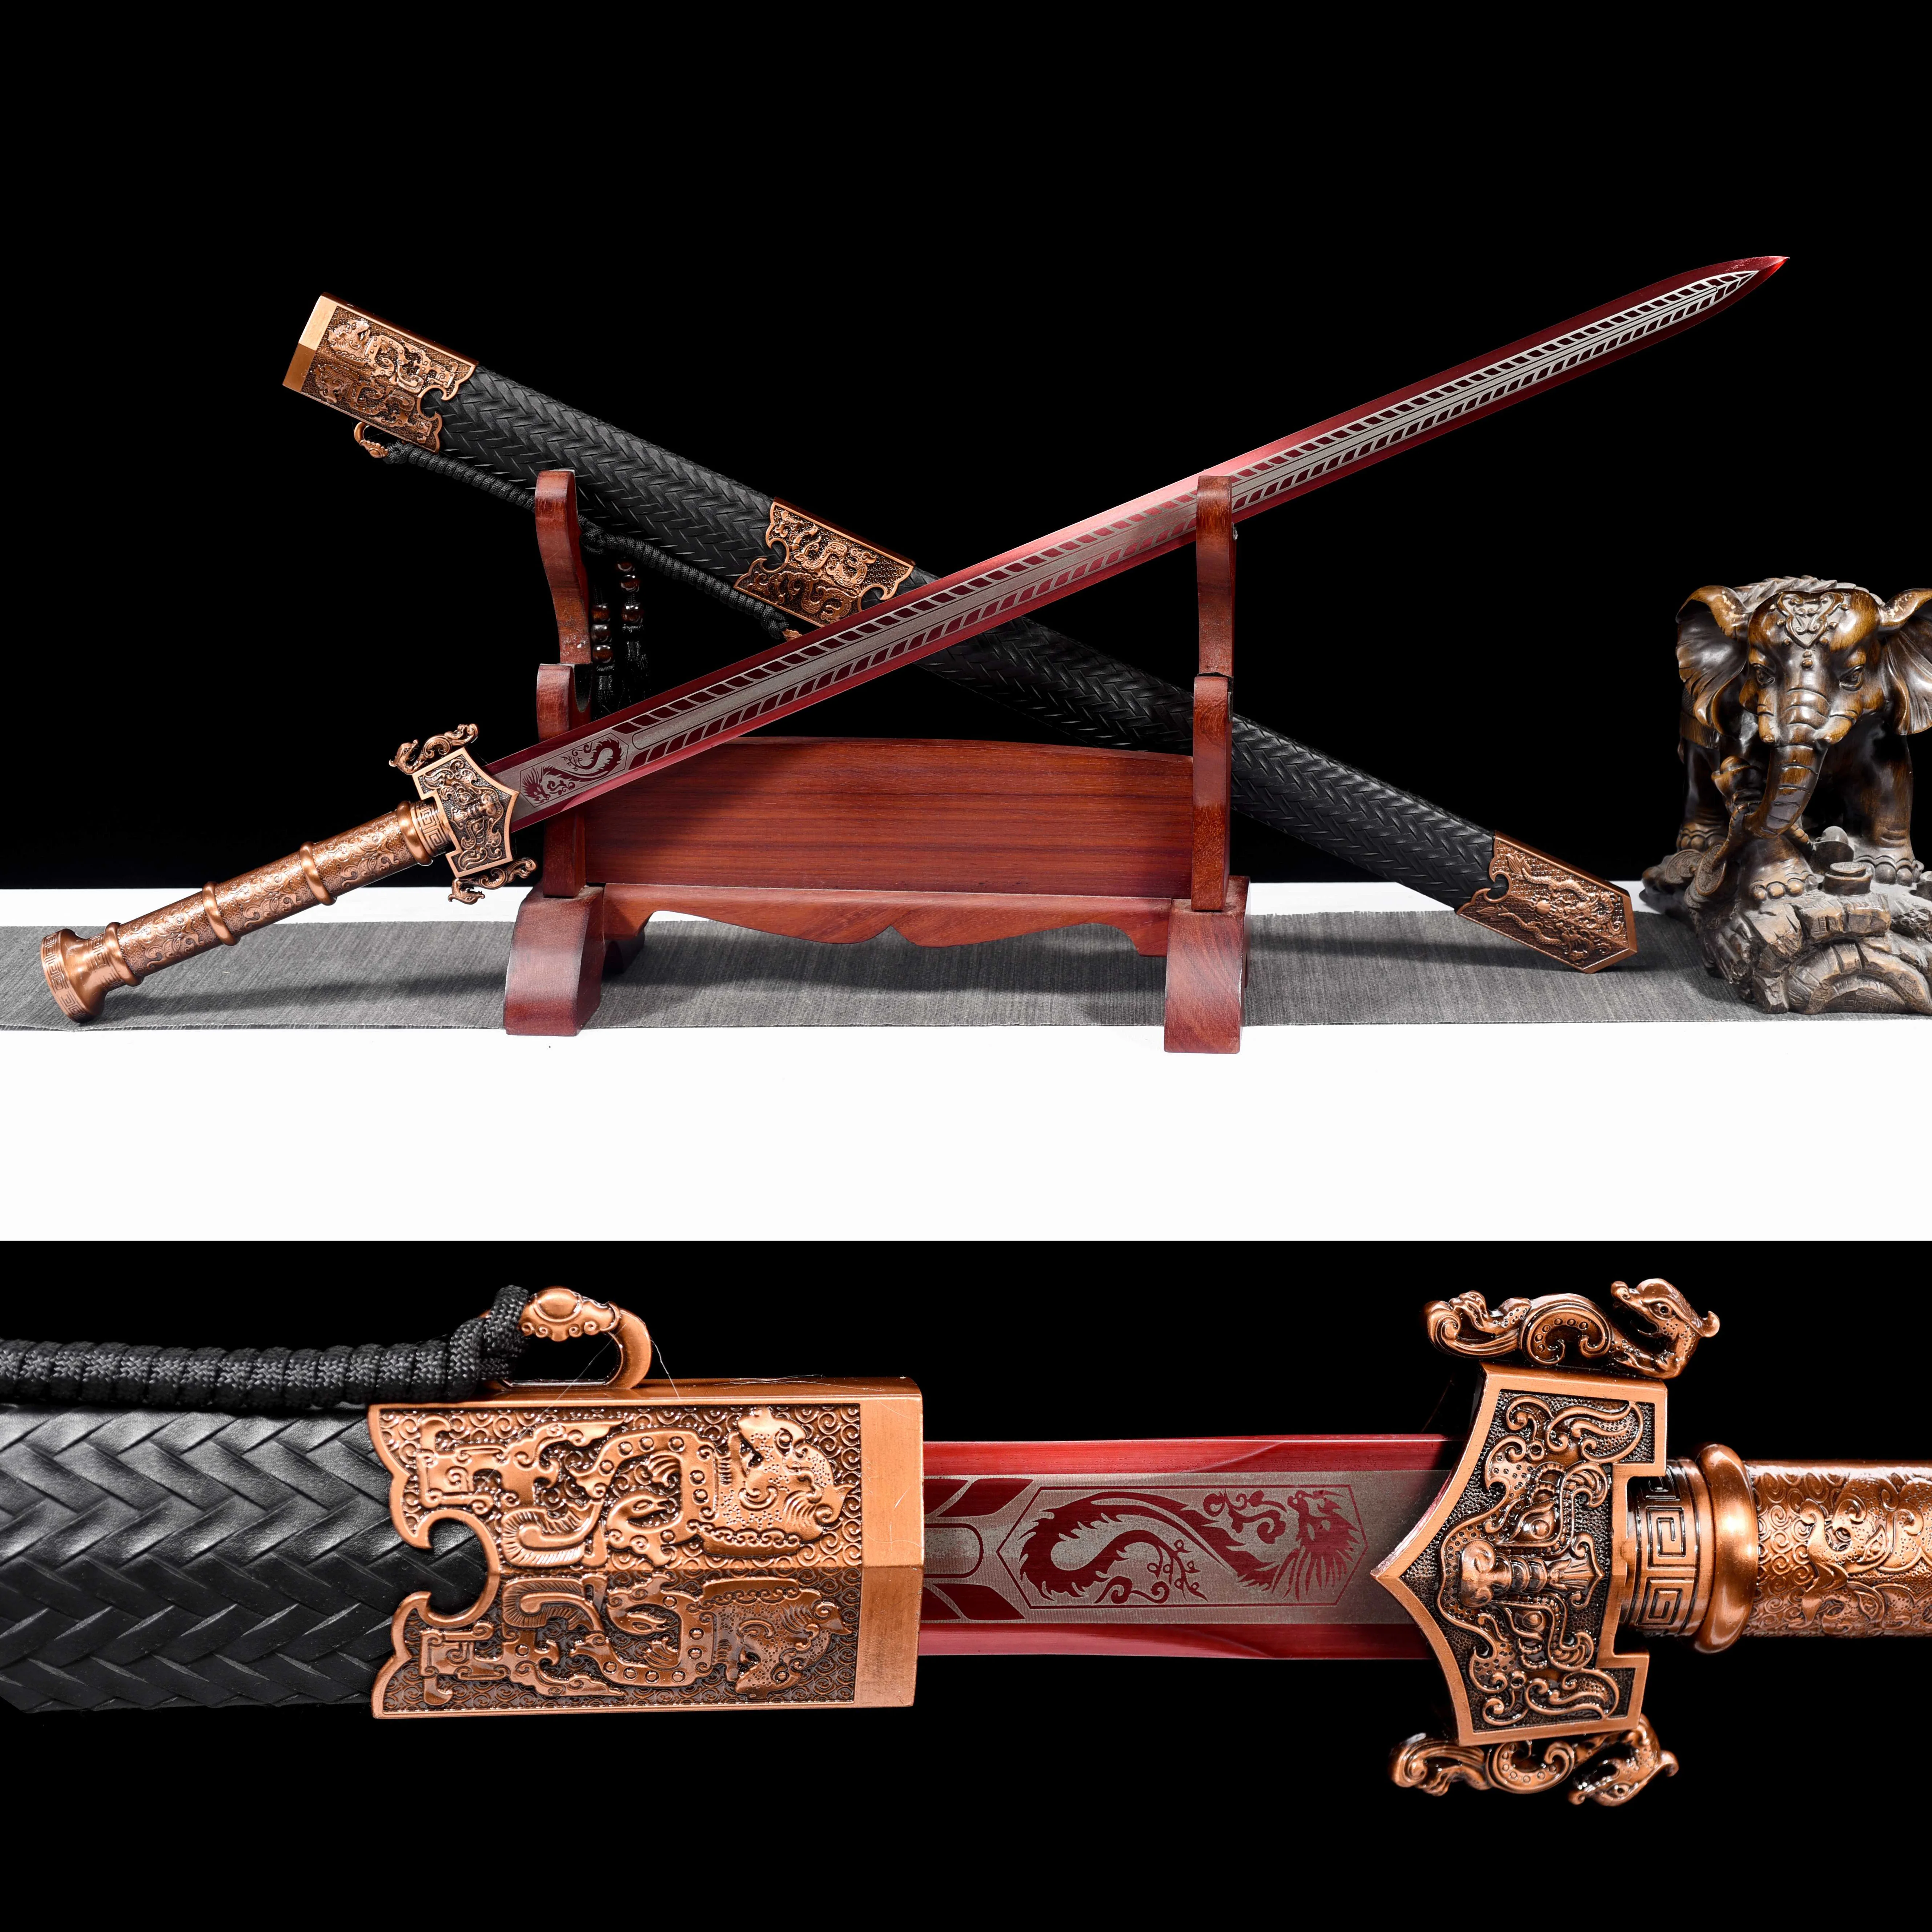 

103cm sharp Han sword Real Steel sword Medieval battle preparation Kung Fu Hell Devil Sword Martial arts fighting weapon katana